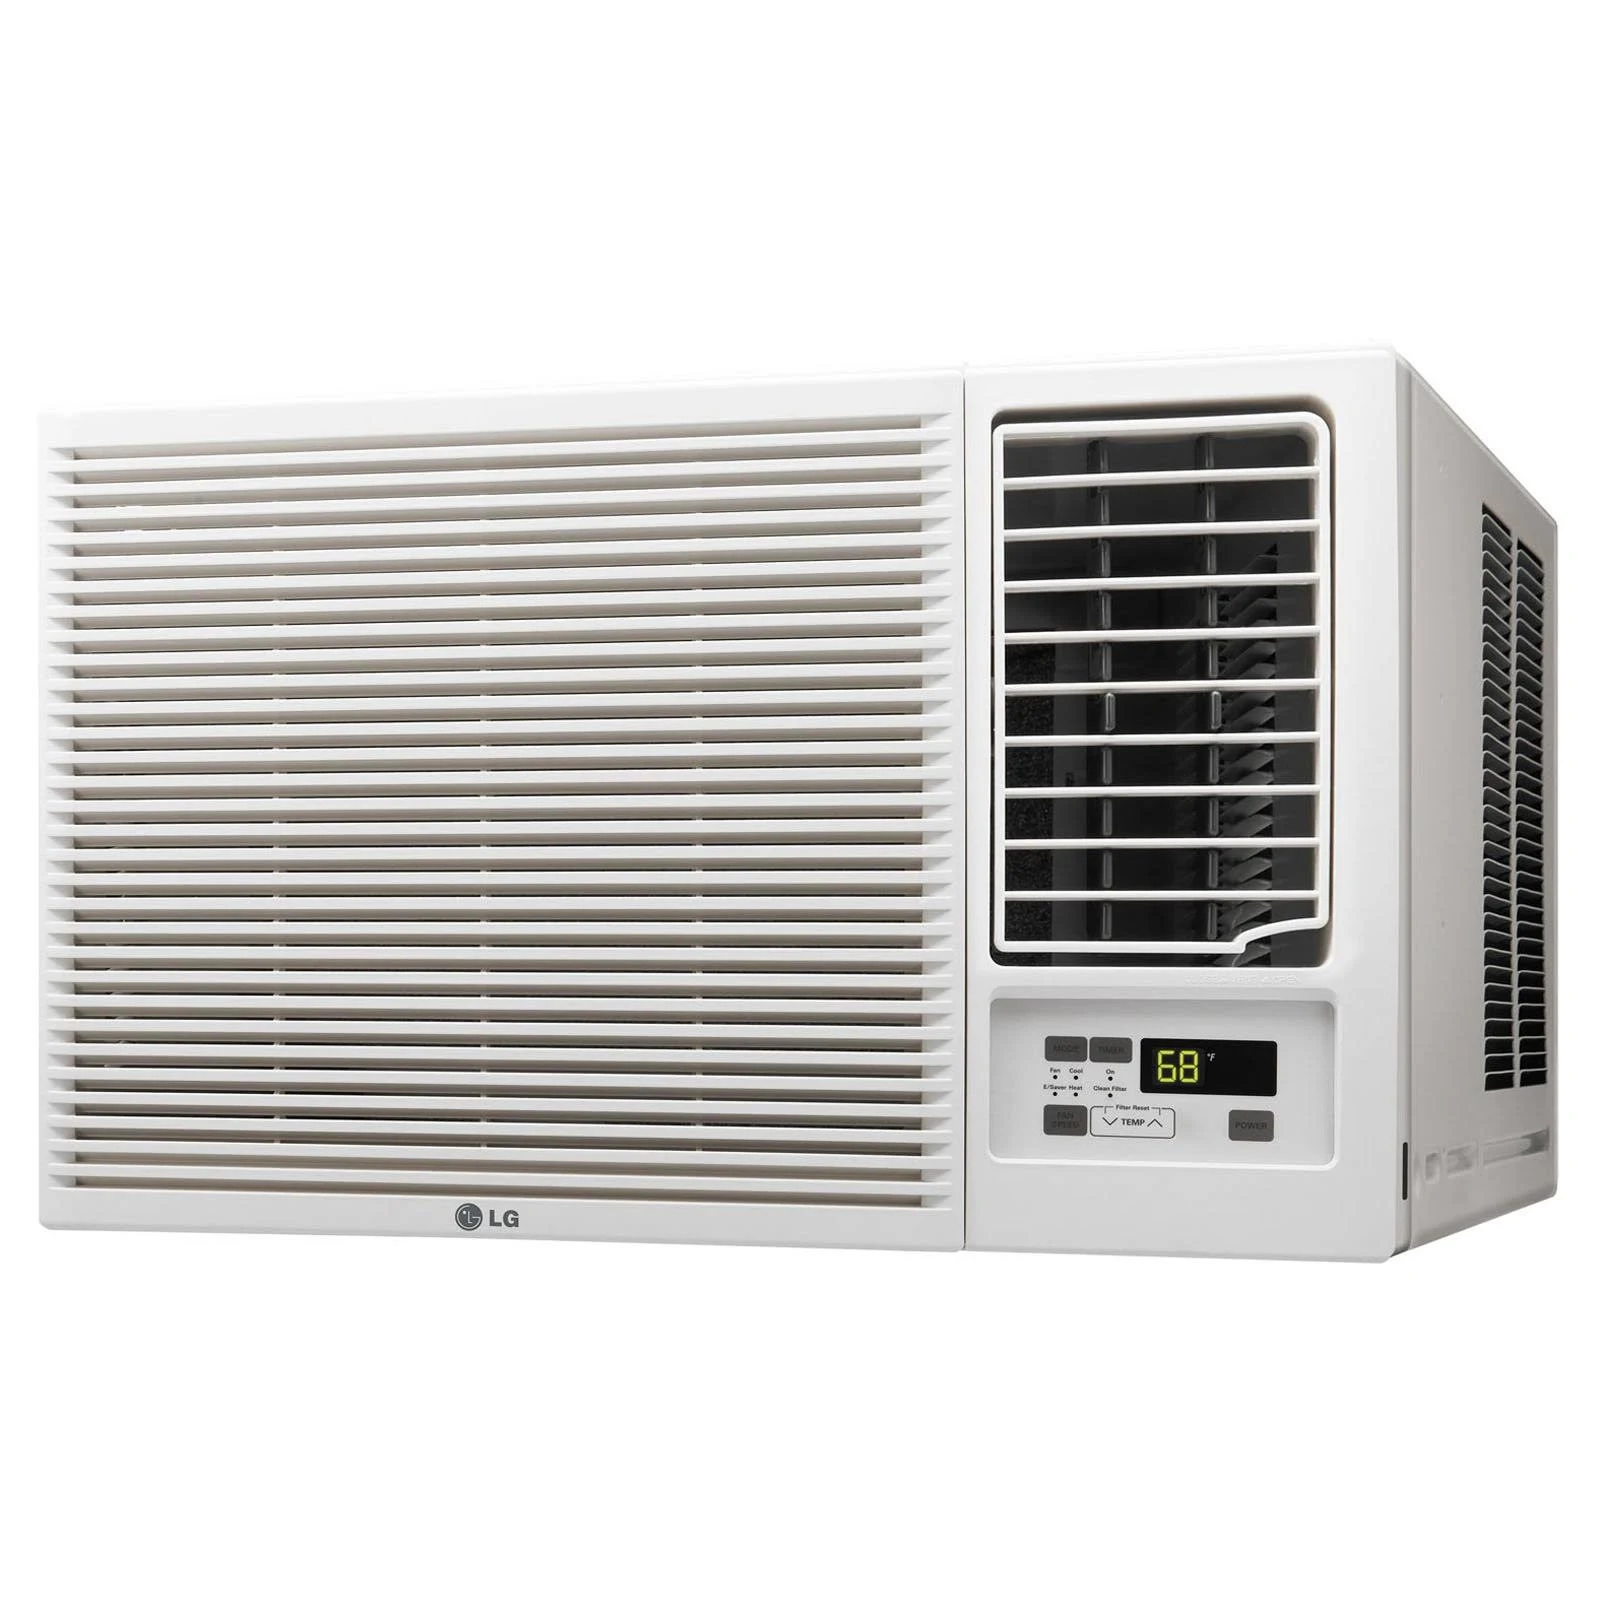 LG Electronics LG 12,000 BTU 230V Window-Mounted AIR Conditioner with 11,200 BTU Heat Function